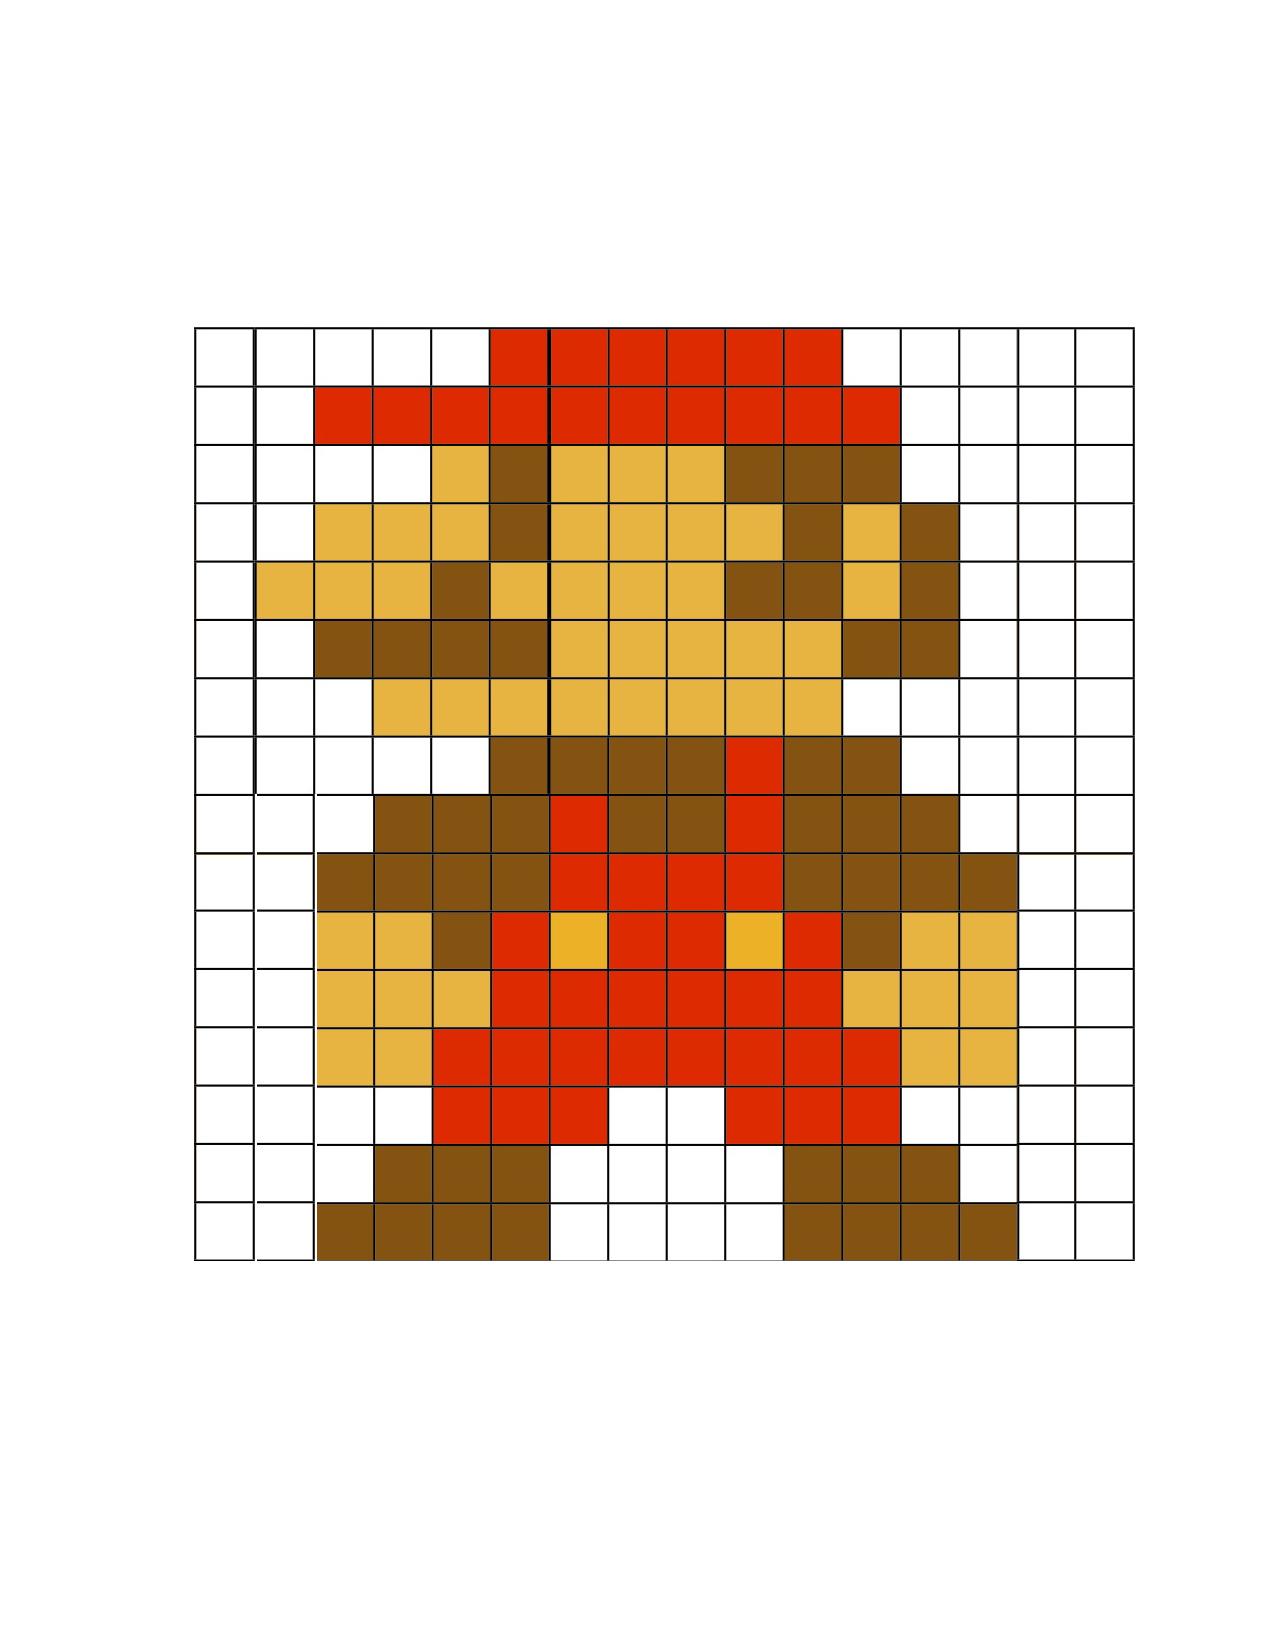 8 Bit Mario Facing Left.jpg